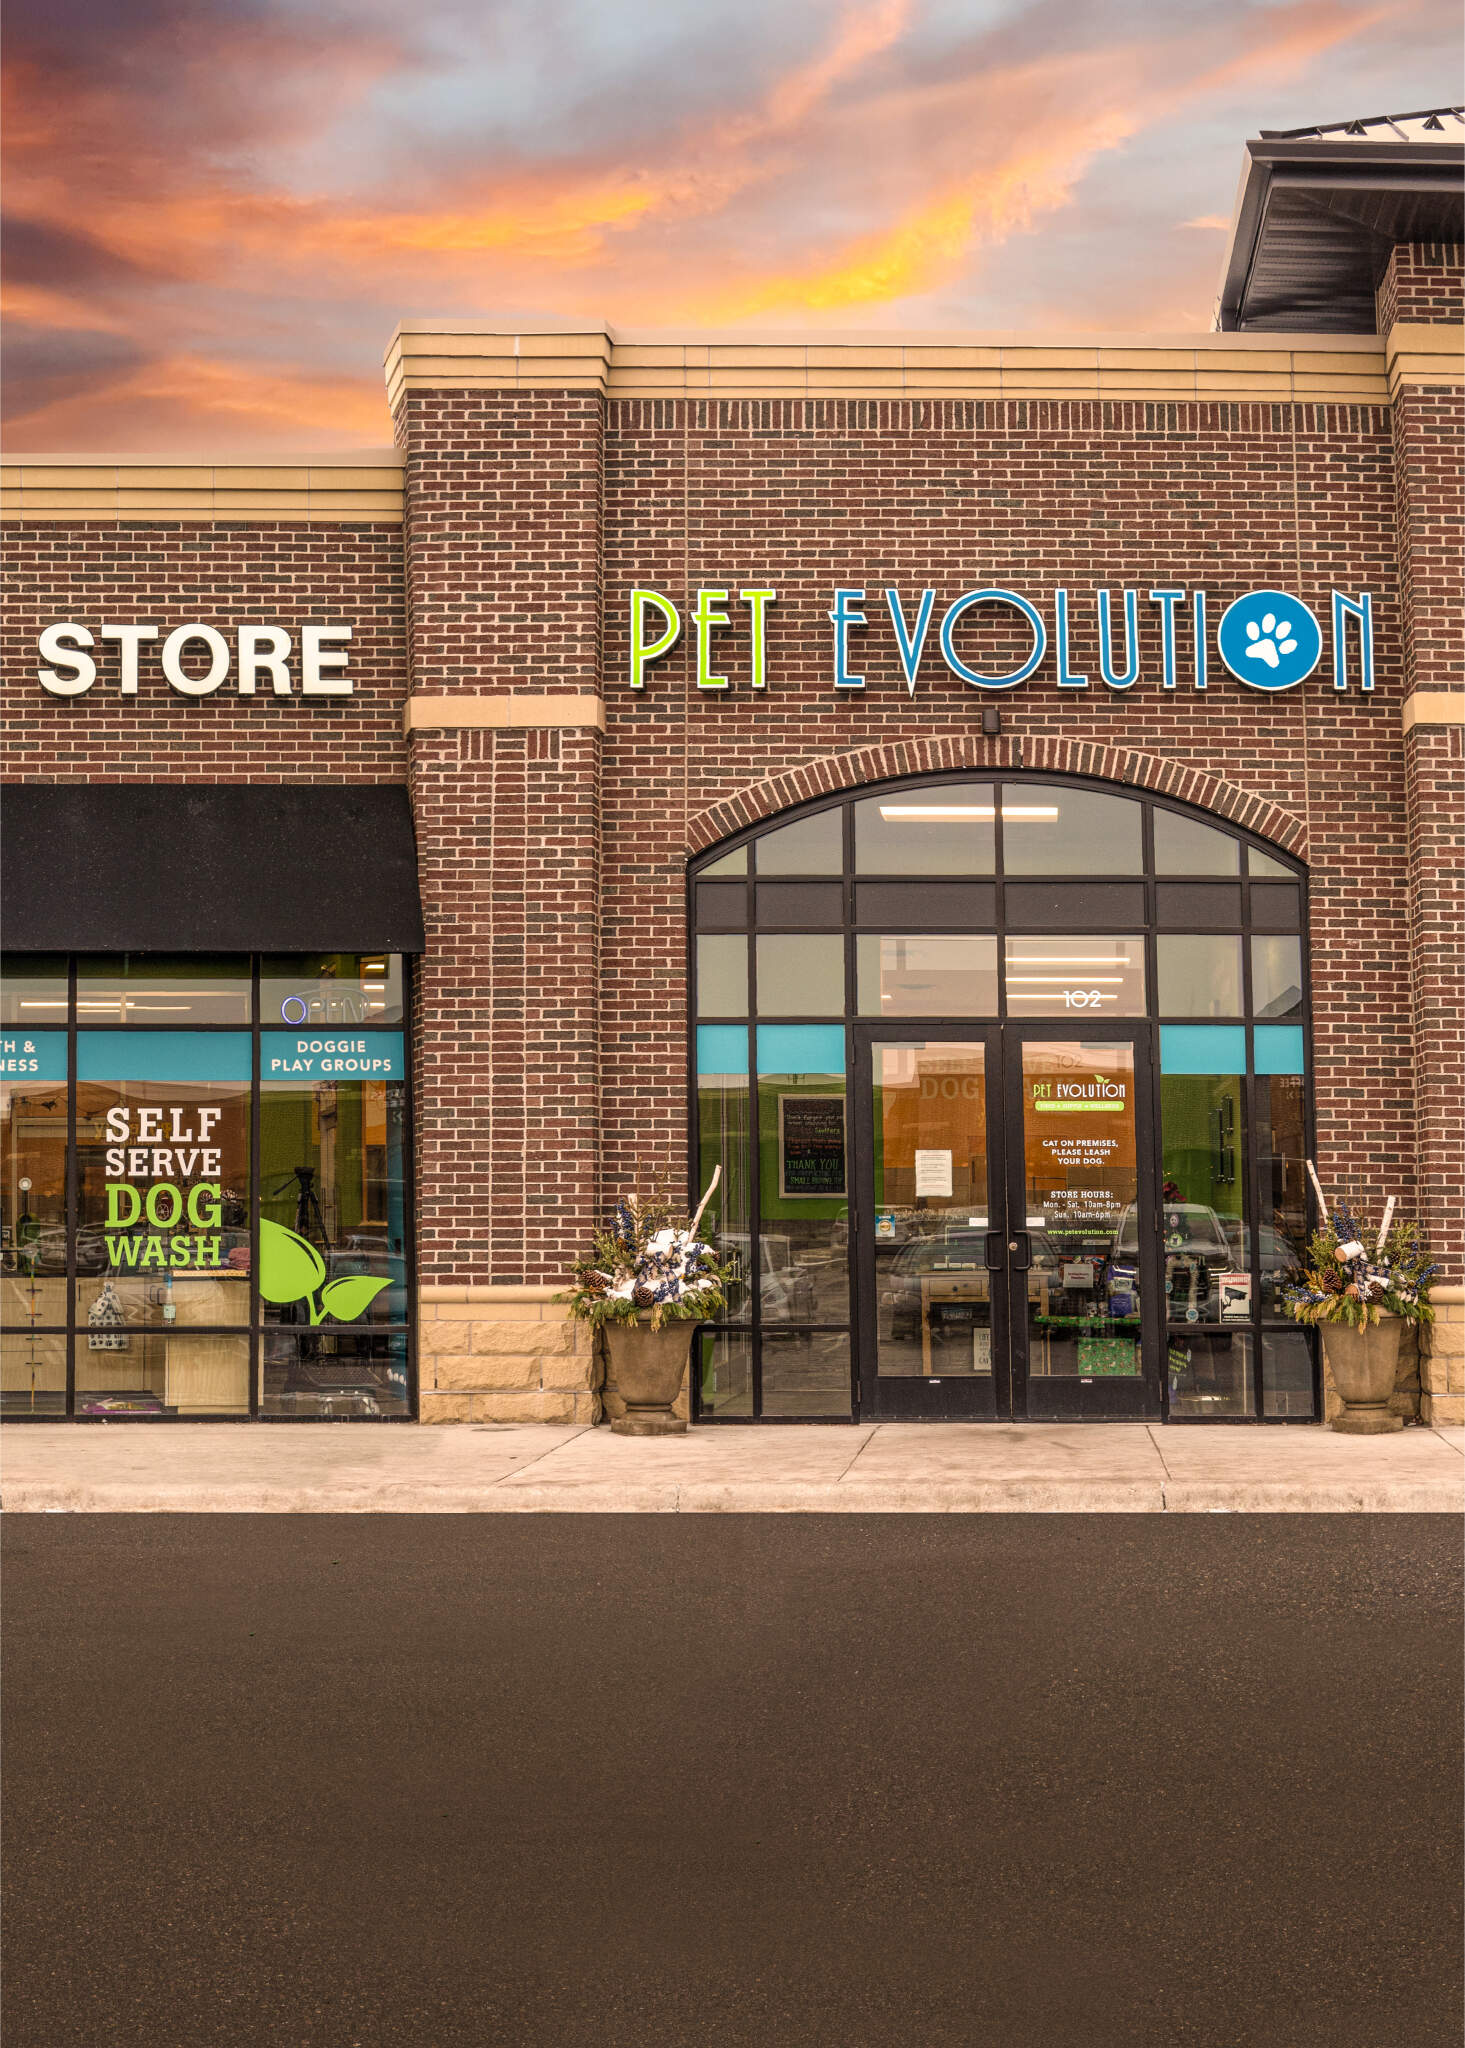 Pet Evolution store